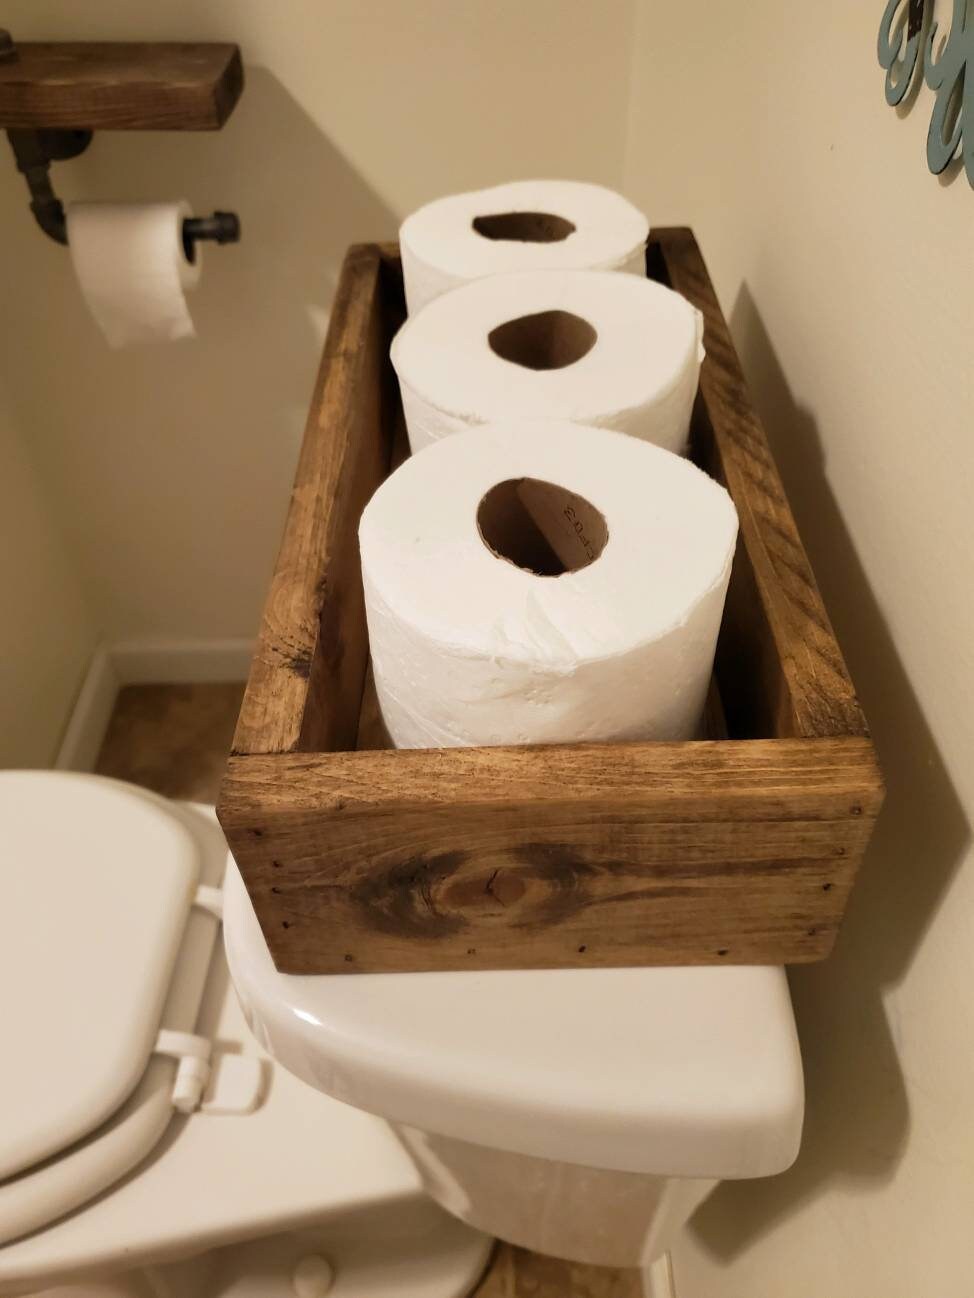 Toilet Paper Holder Wood Bathroom Toilet Tissue Paper Roll Storage